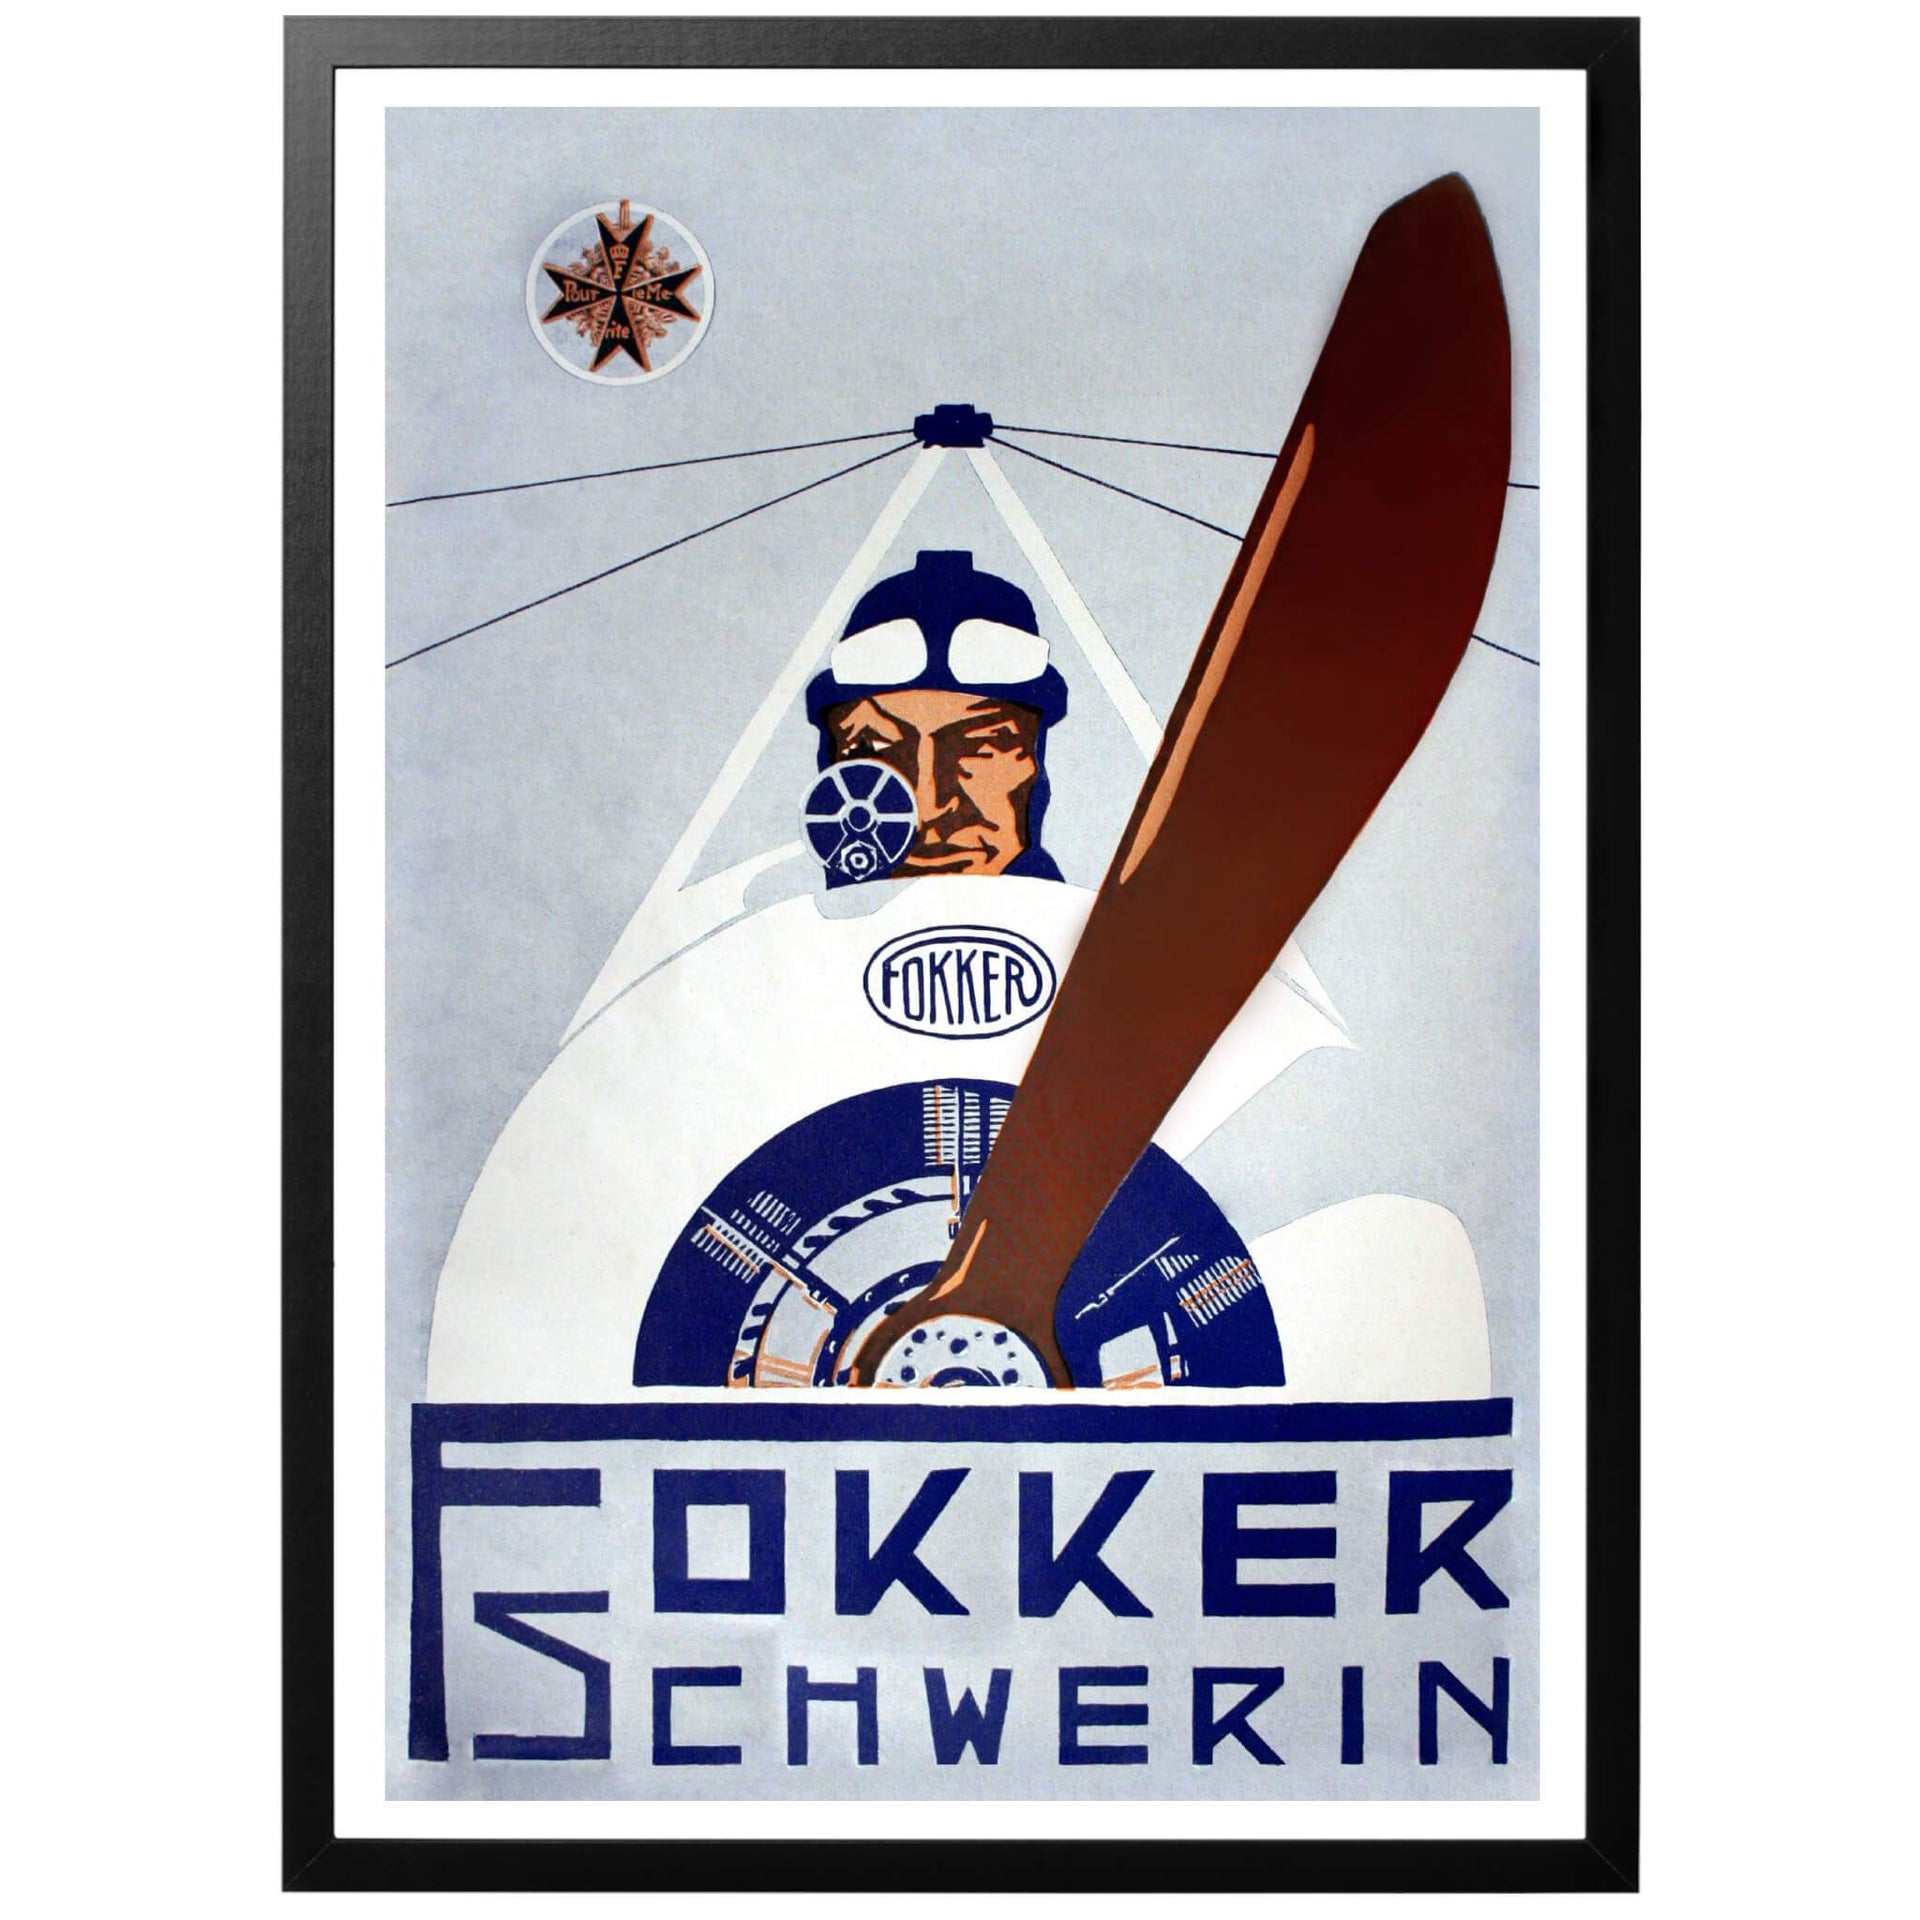 Fokker Schwerin - Tysk WWI affisch från 1916. Köp den hos World War Era! Vi trycker i egna lokaler - på kvalitetspapper från Hahnemühle. Frakt med PostNord.